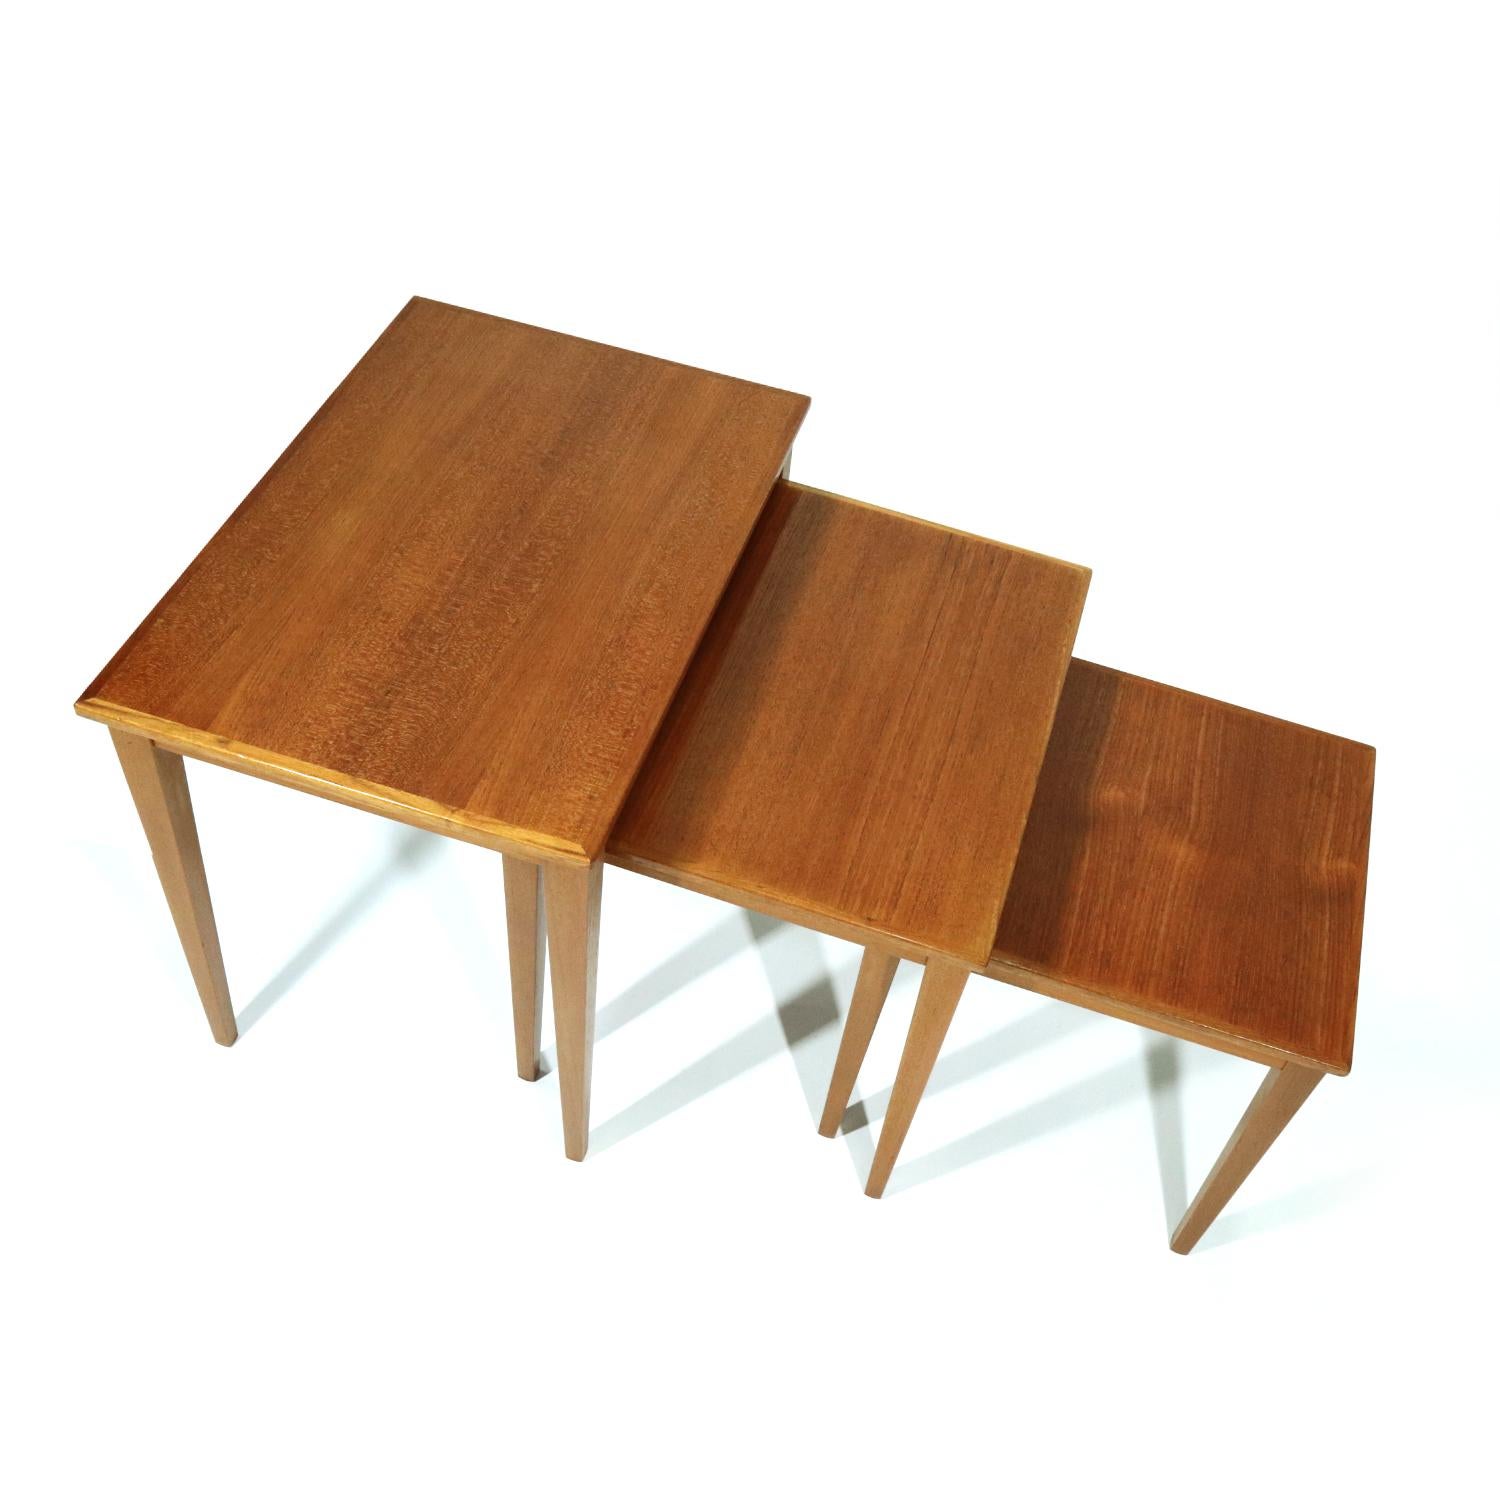 Mid-20th Century Refinished Mid-Century Modern Danish Teak Nesting Tables